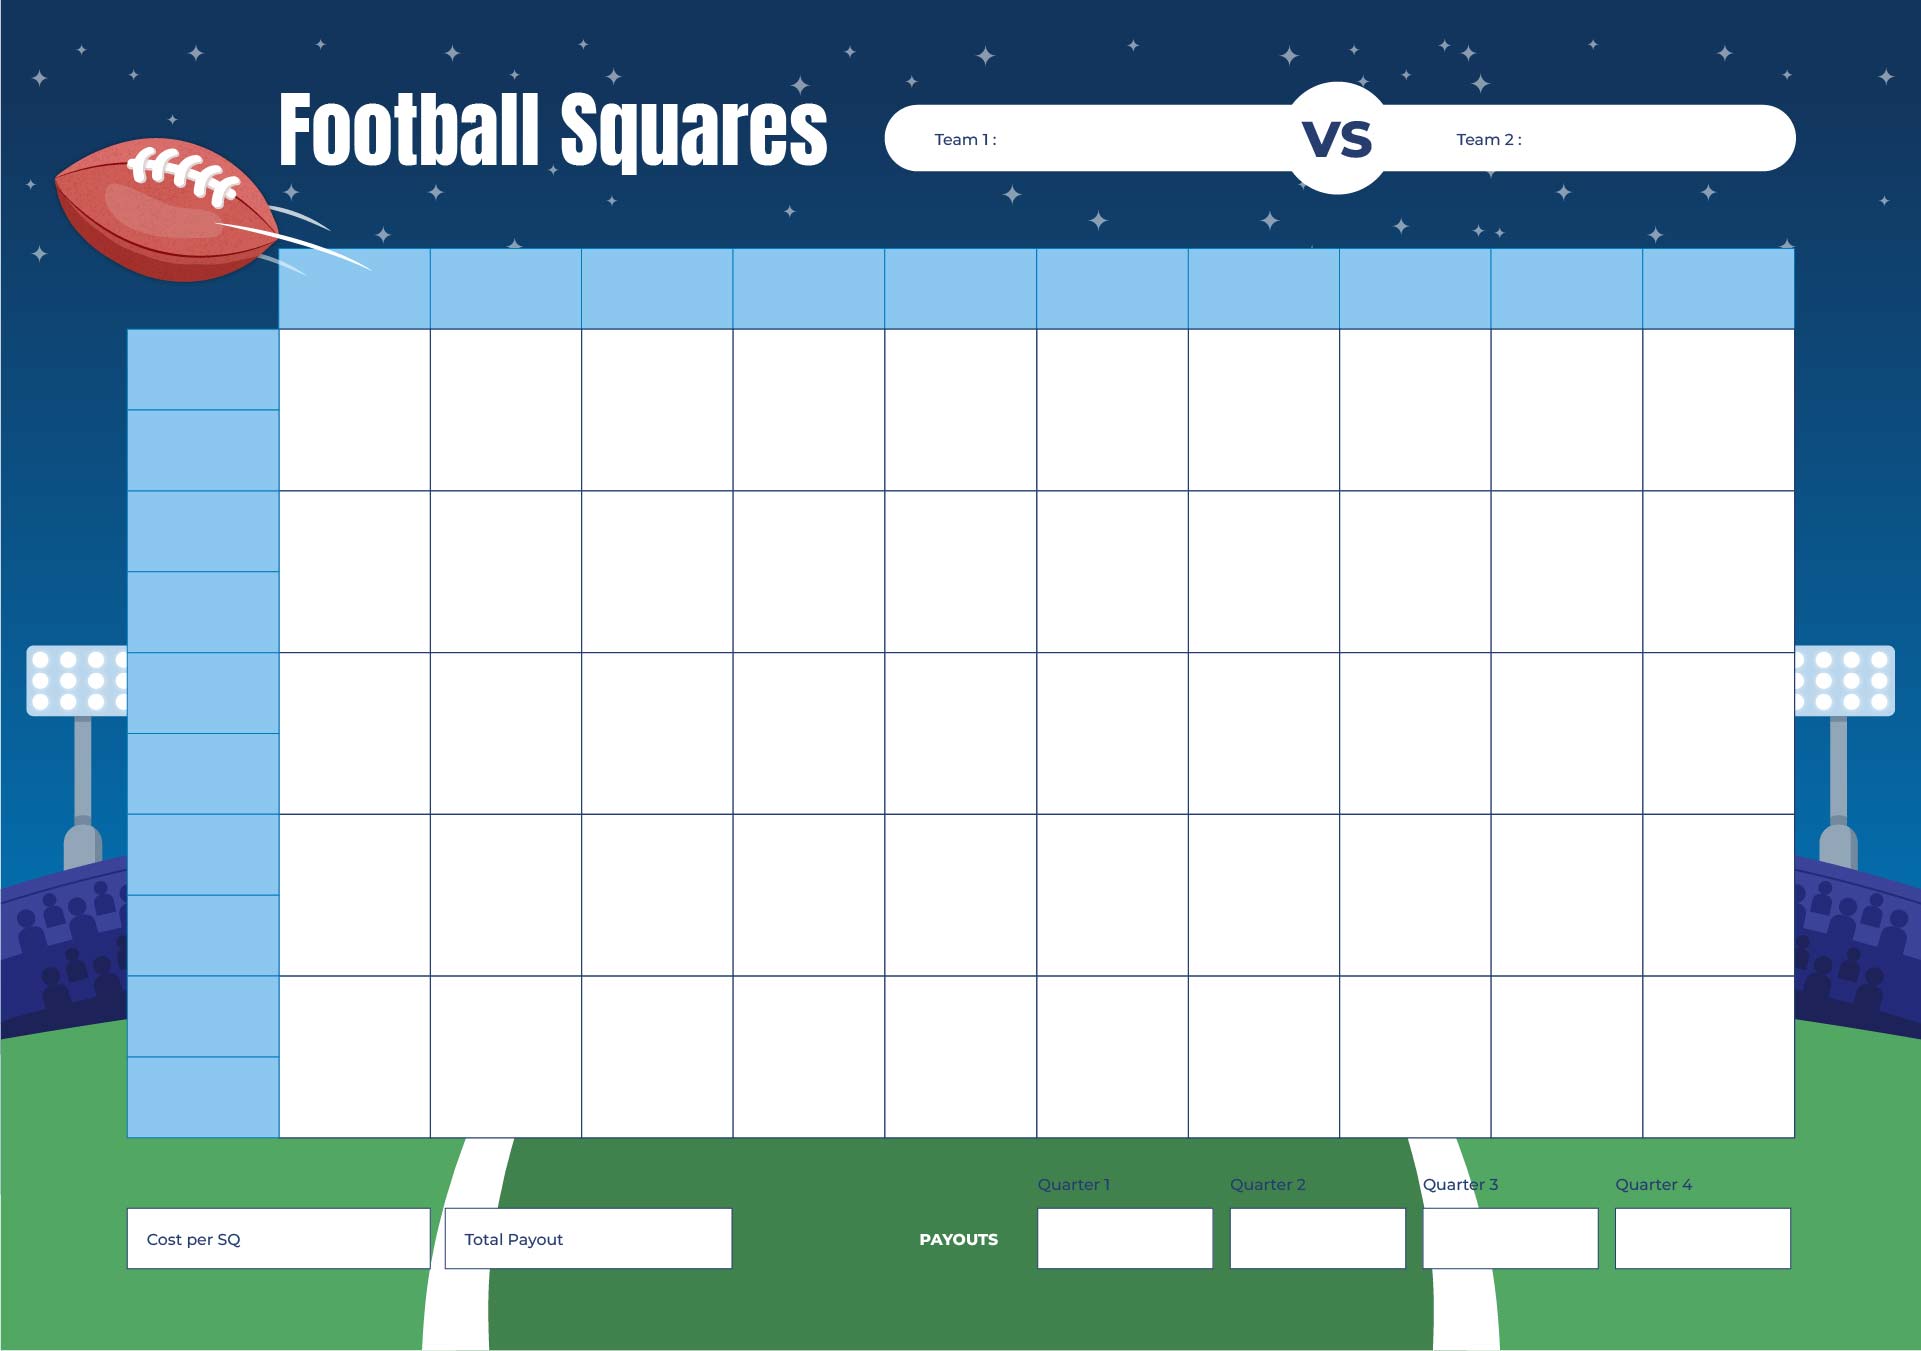 Printable NFL Football 50 Square Grid